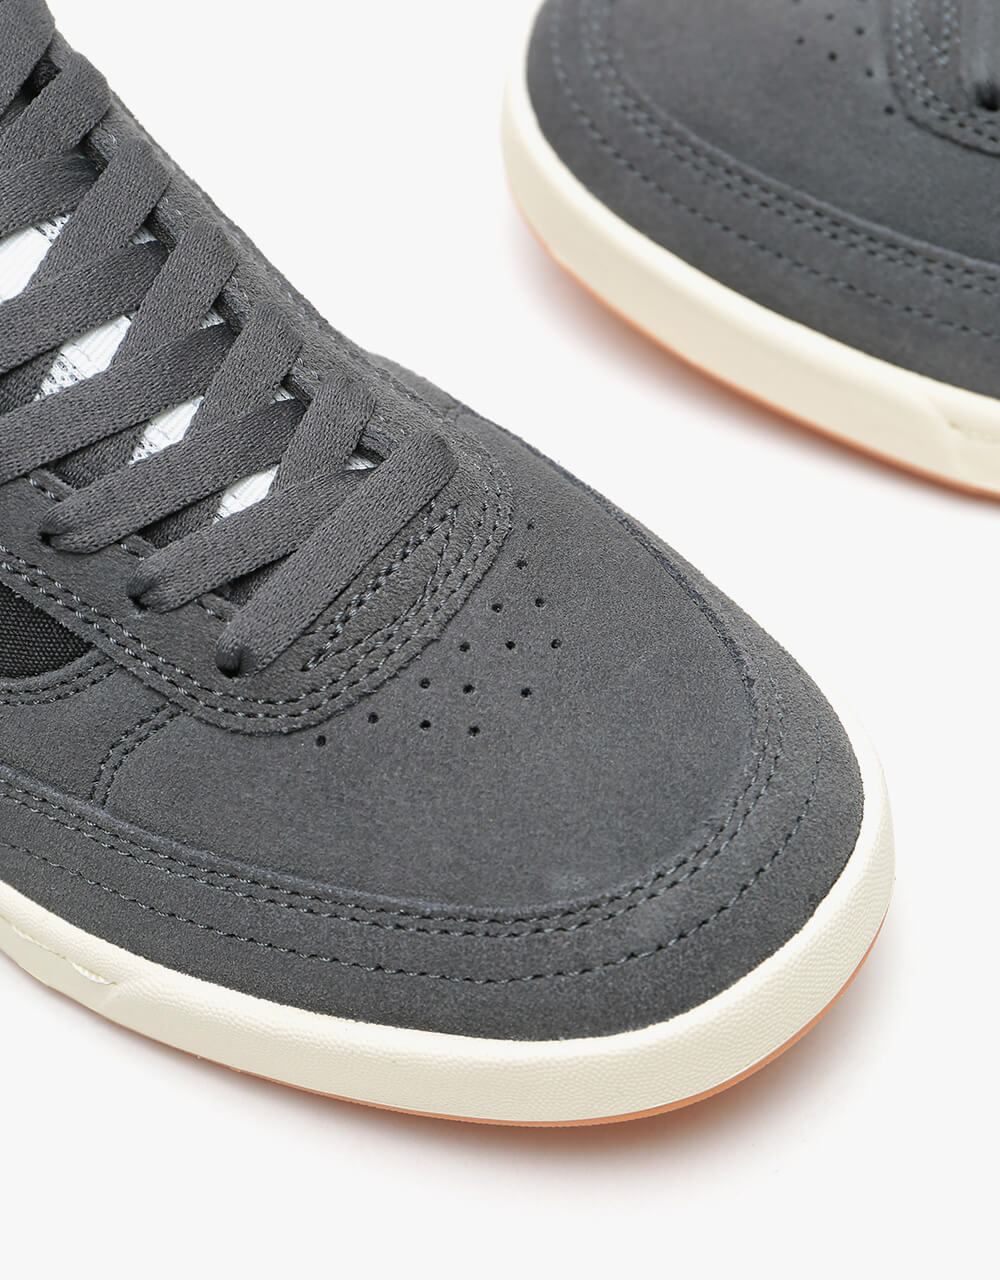 New Balance Numeric 440 Skate Shoes - Grey/Black